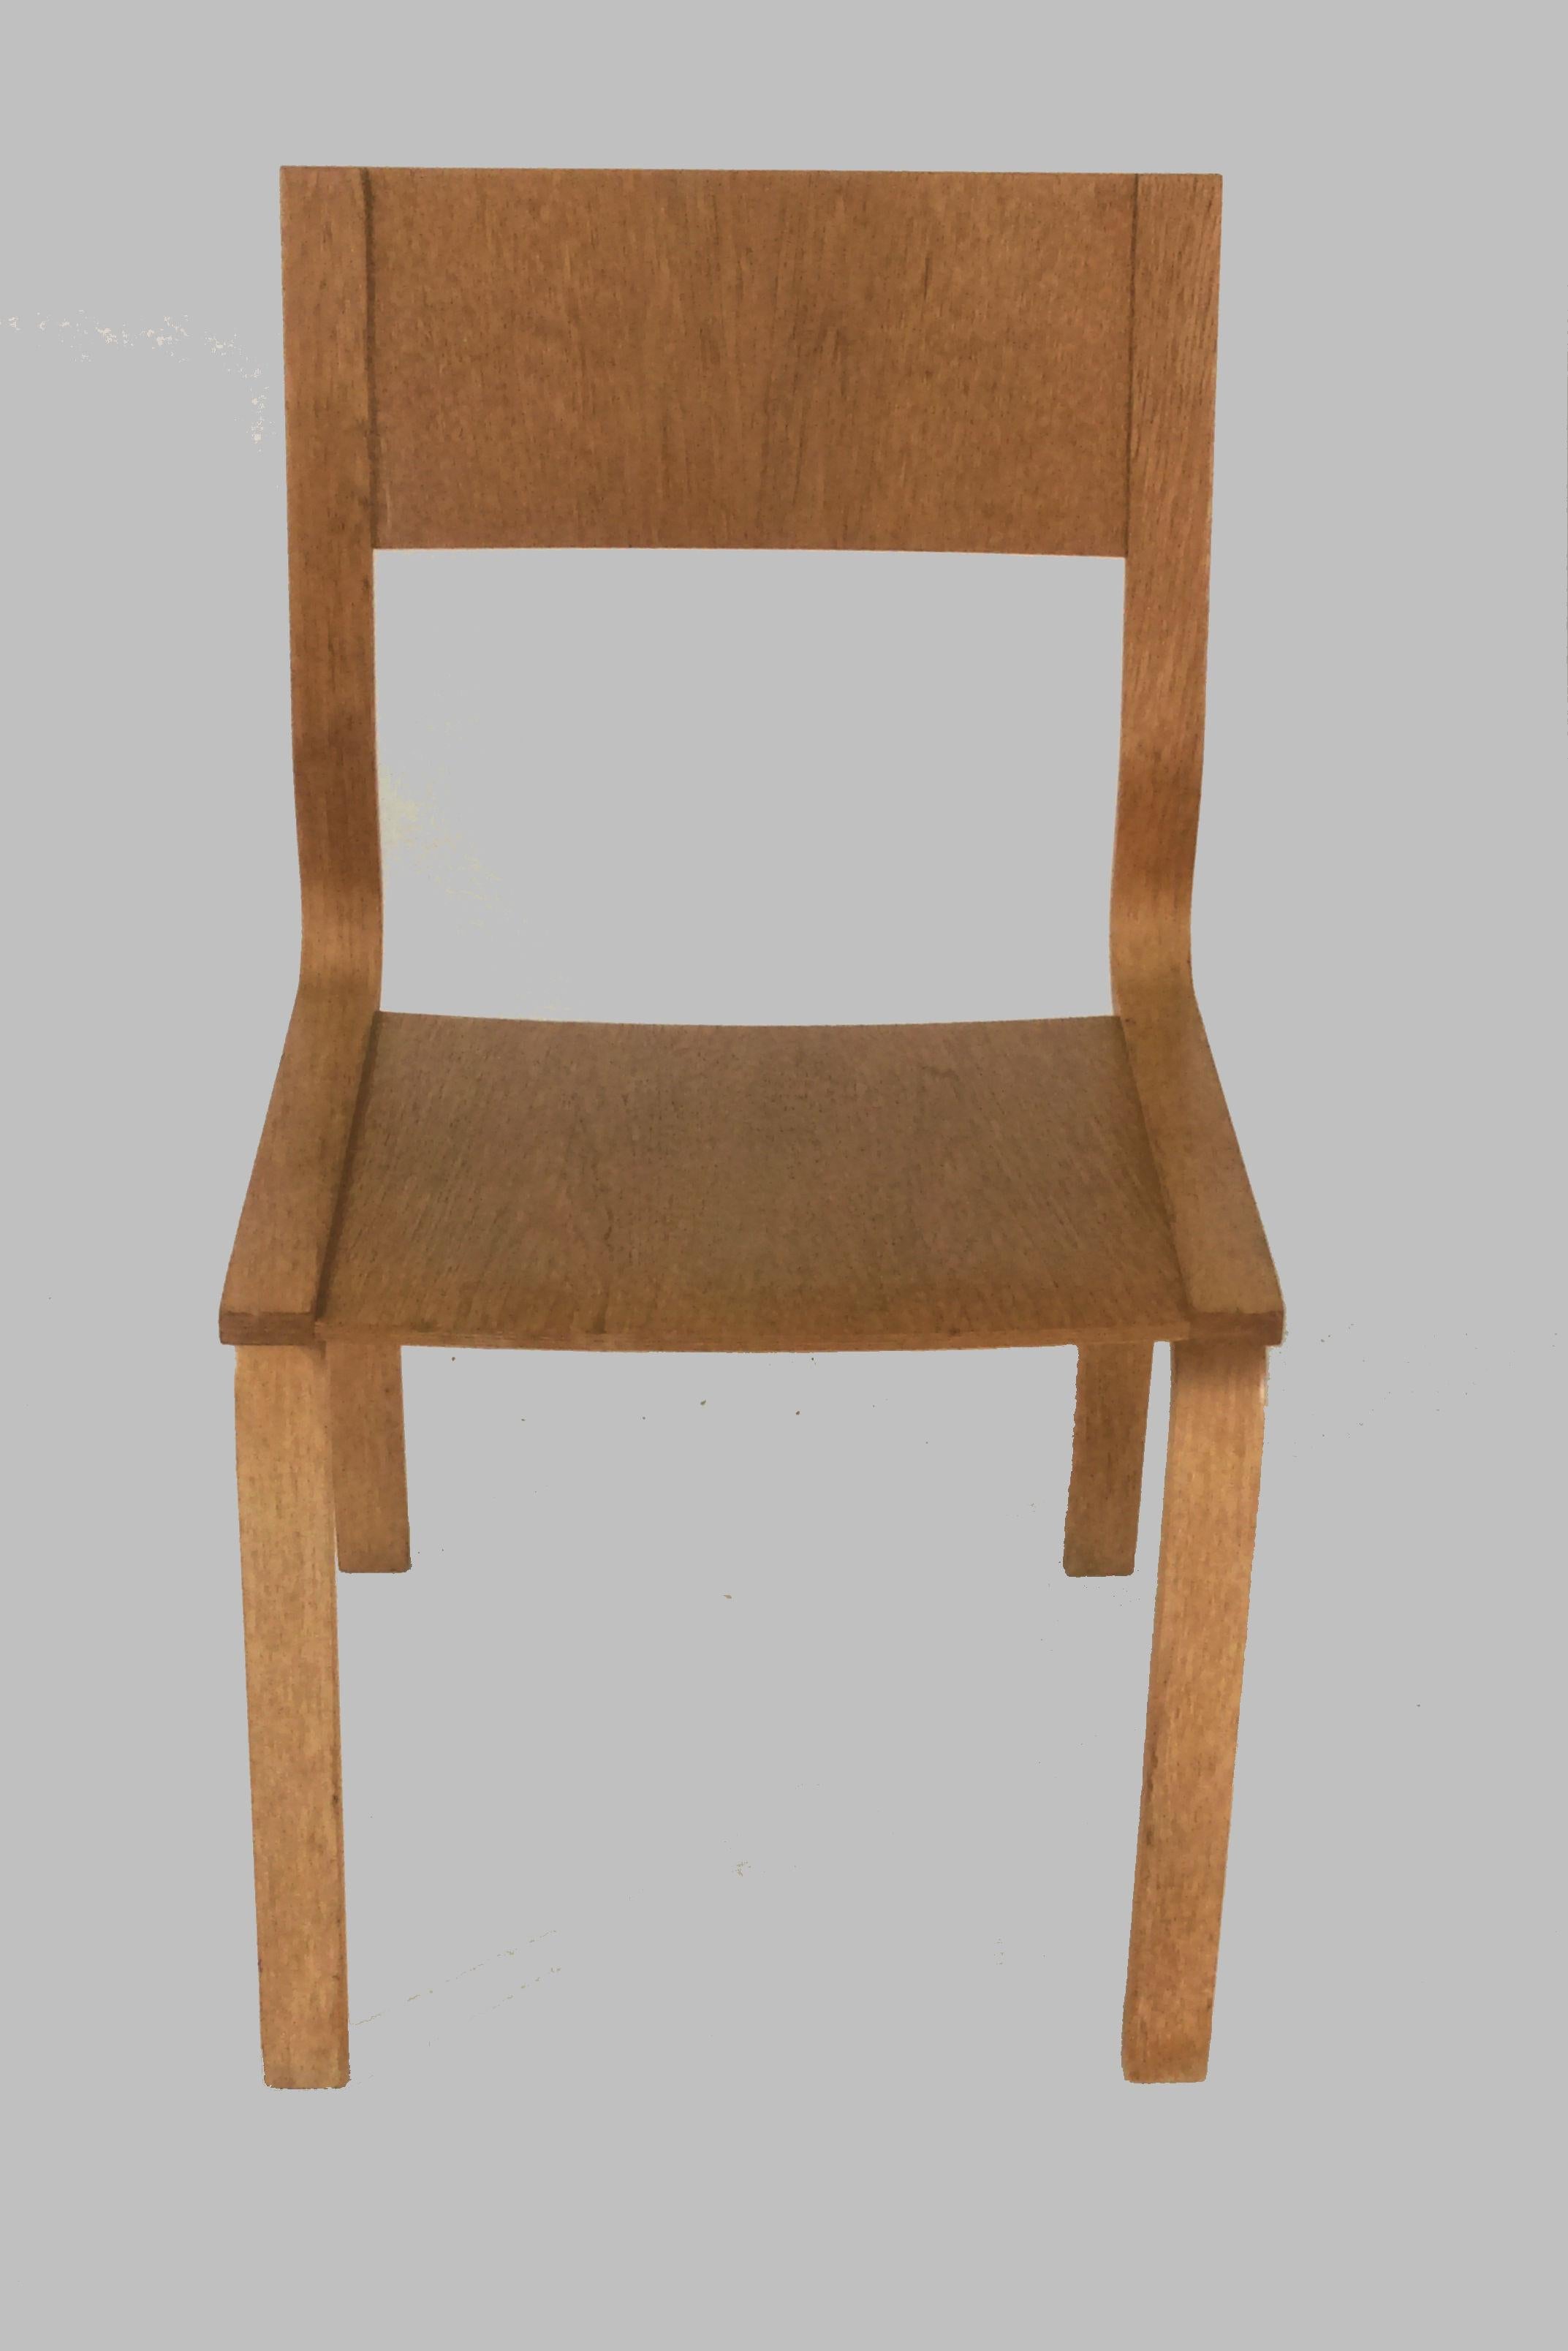 1965 Danish Arne Jacobsen Saint Catherines Desk and Chair in Oak by Fritz Hansen For Sale 2